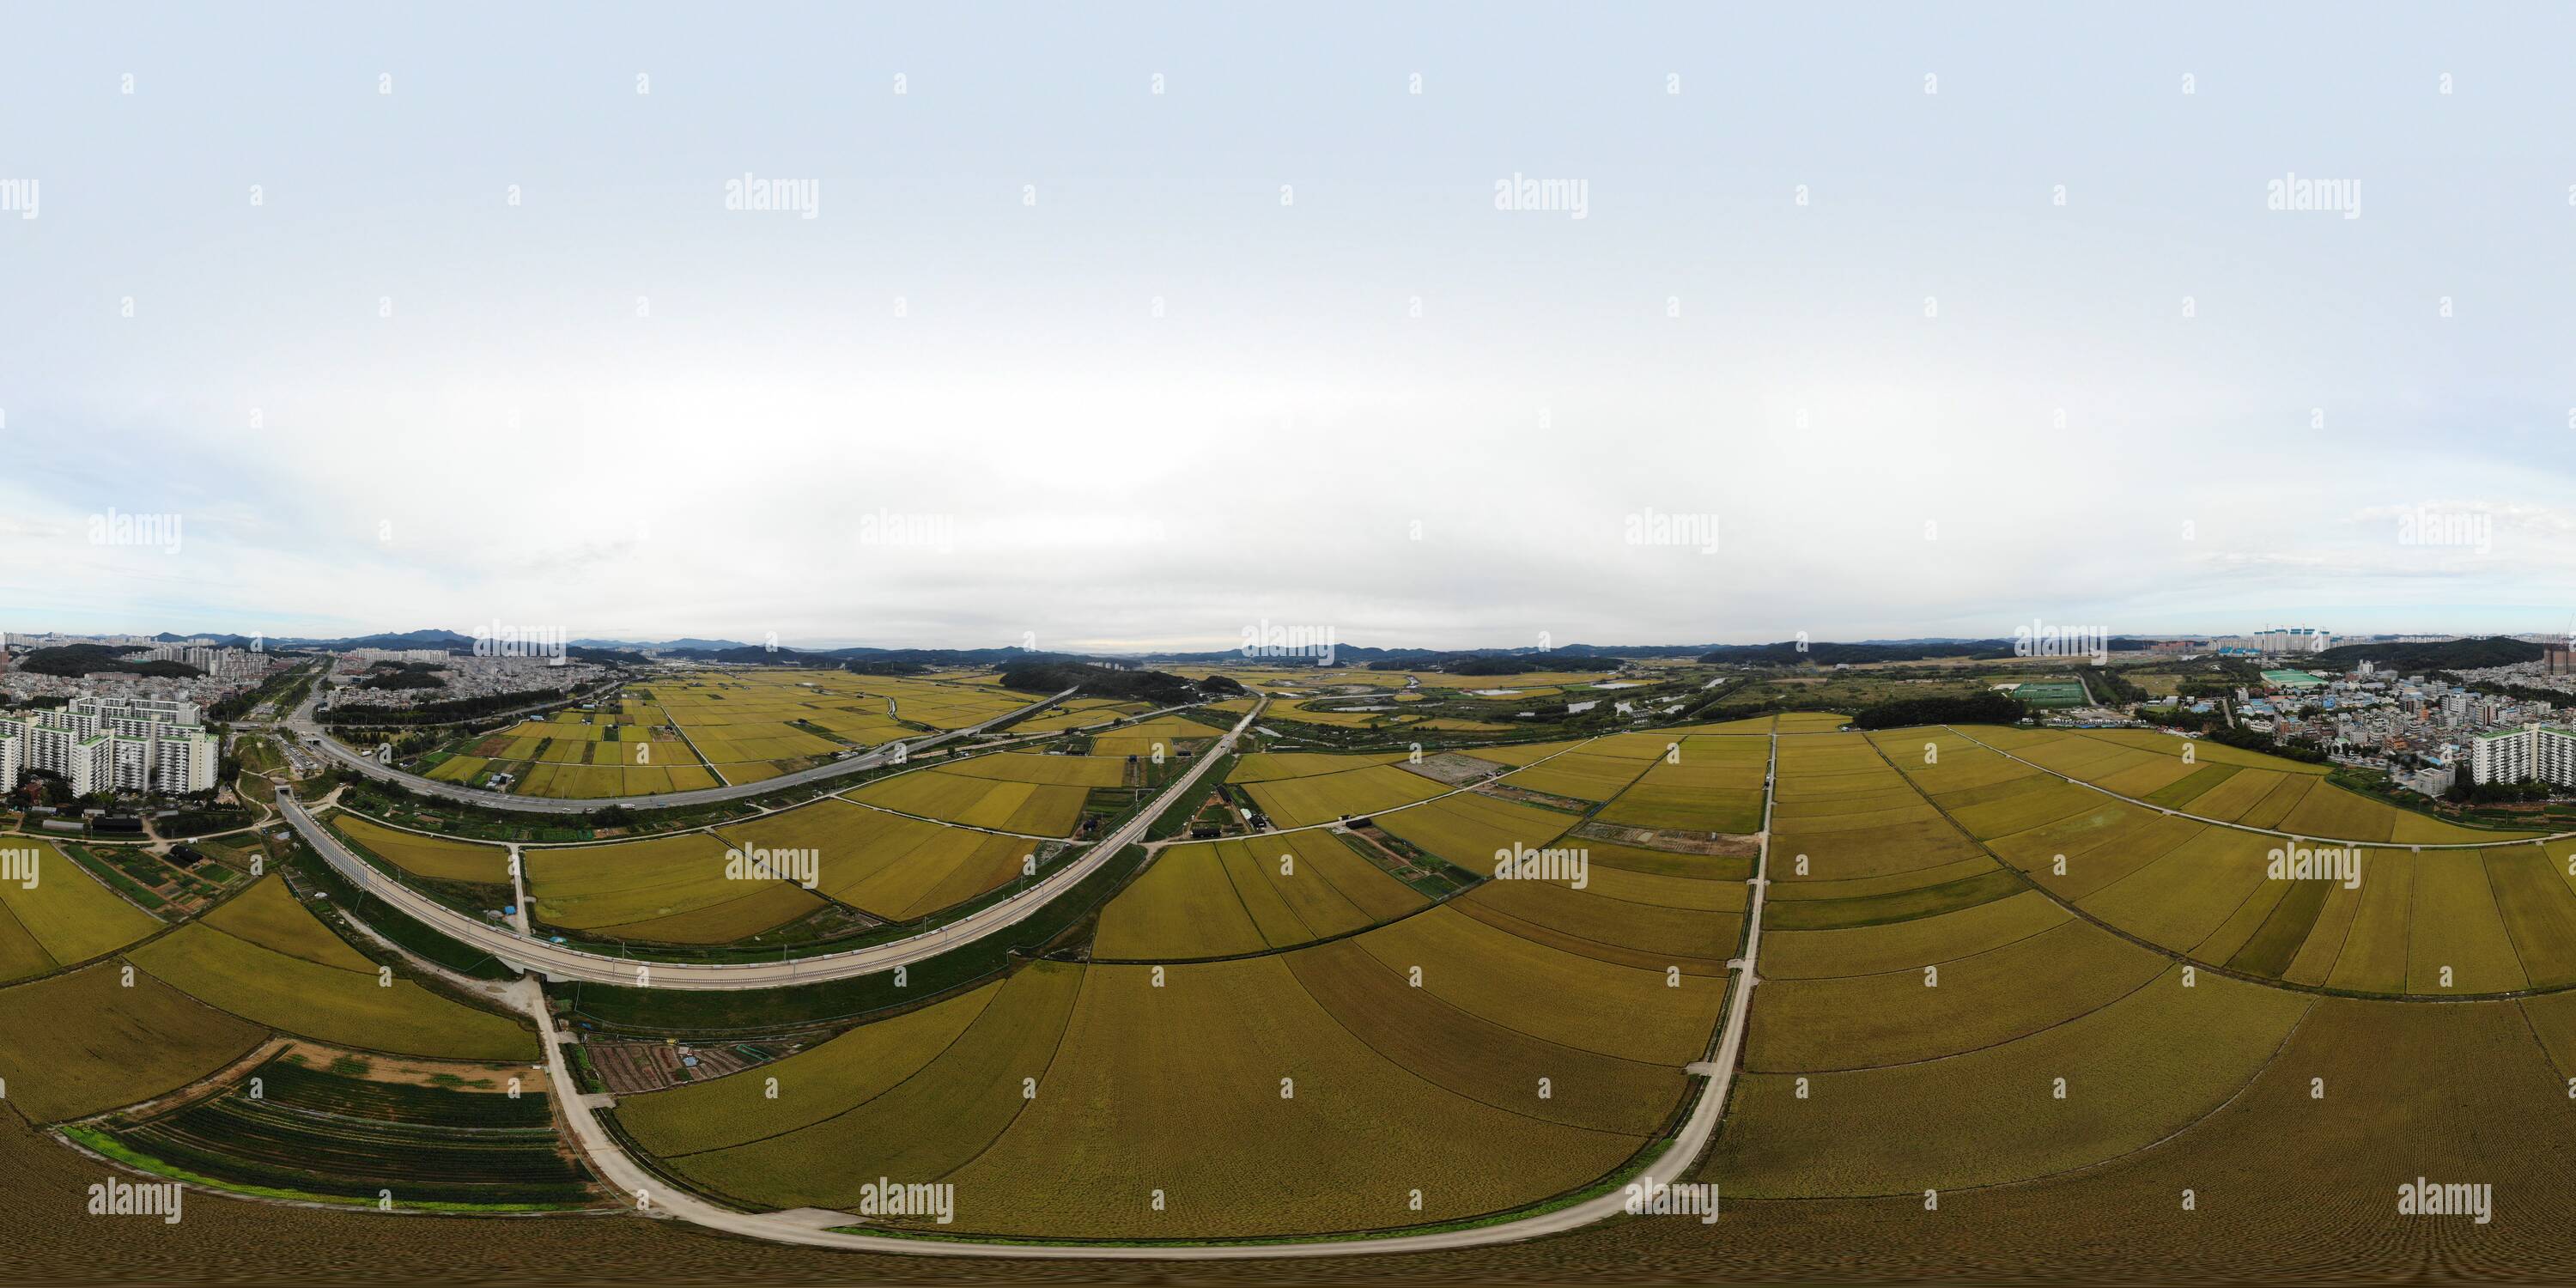 360 degree panoramic view of akf